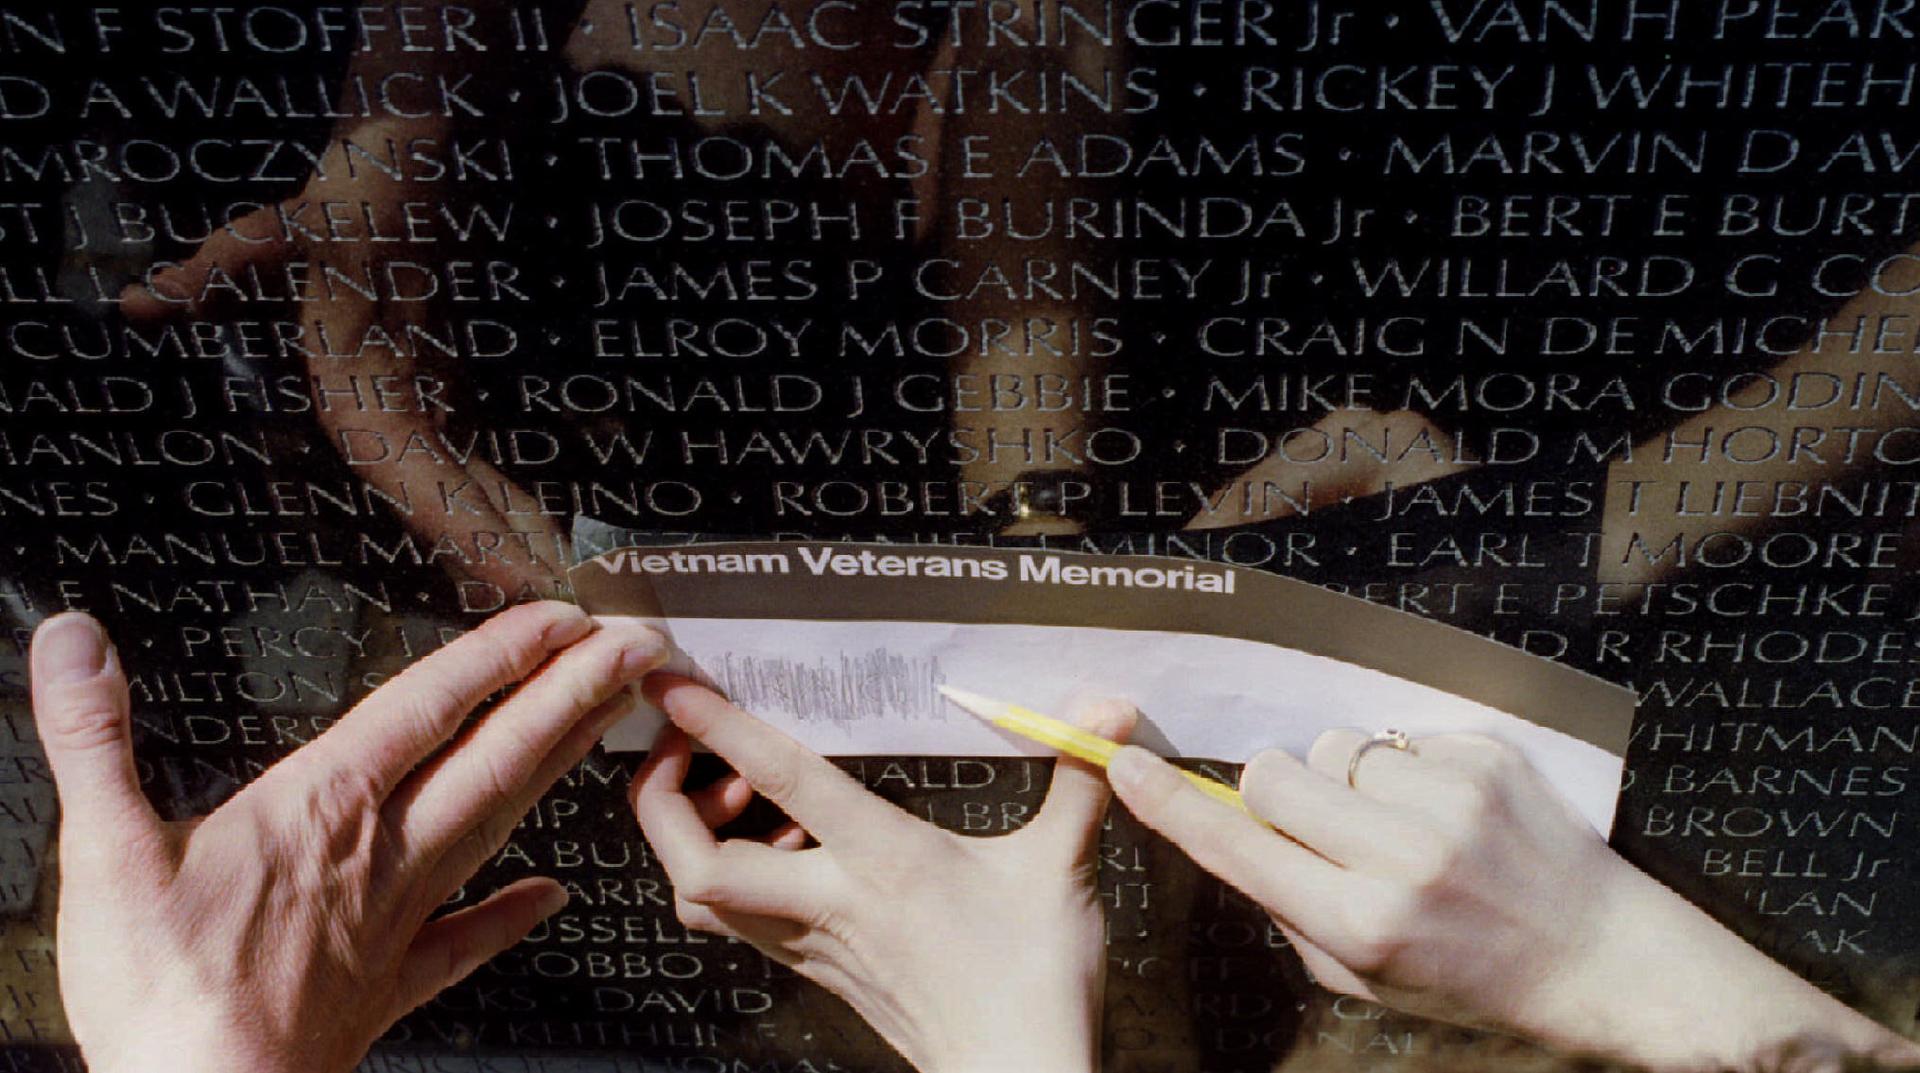 Relatives etch the name of Craig Swagler at the Vietnam Veterans Memorial